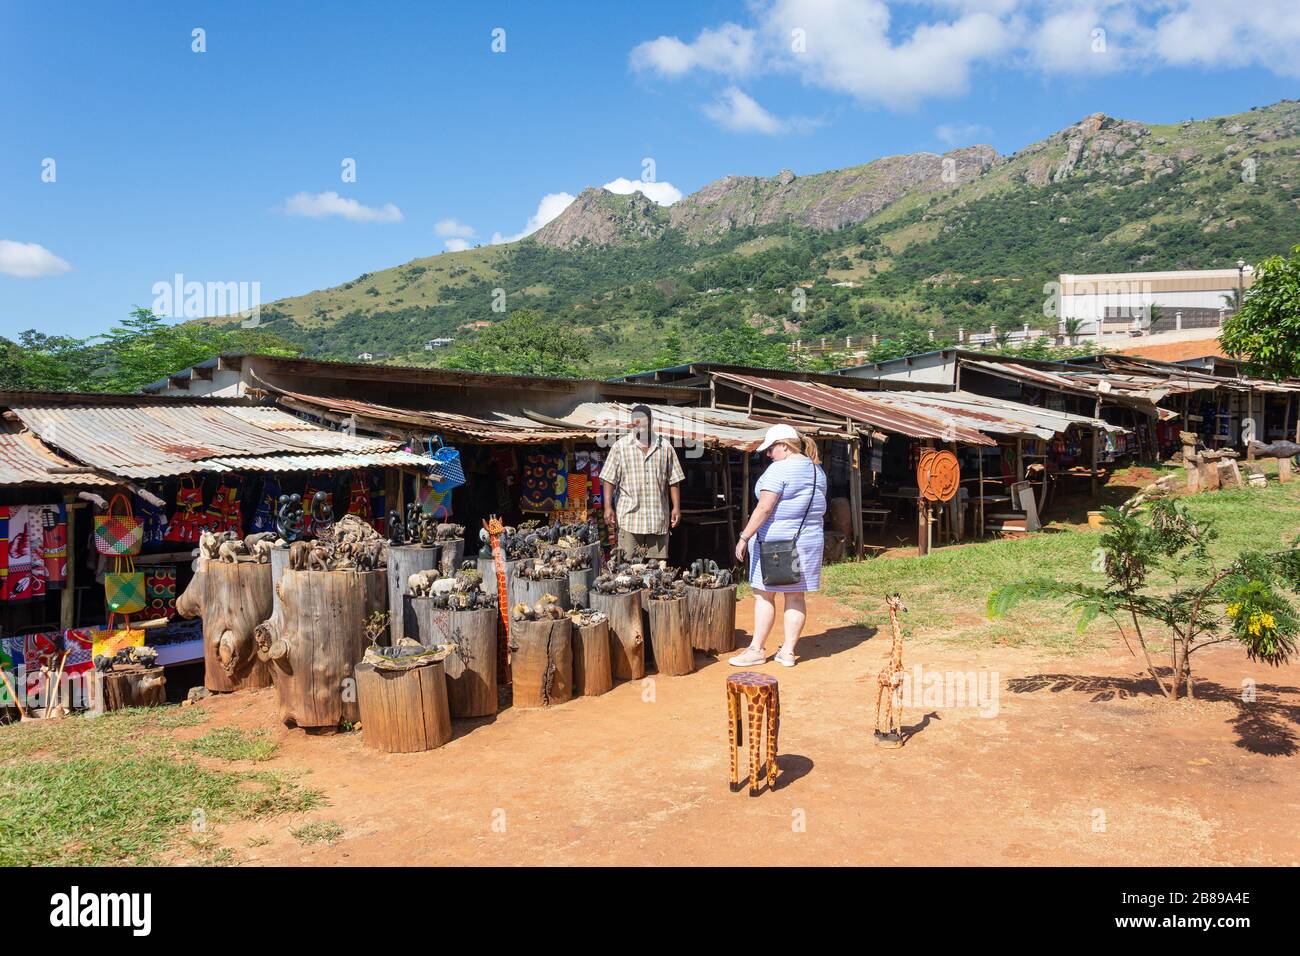 Wood carvings on Ezulwini Handicraft Market stall, Lobamba, Ezulwini Valley, Hhohho Region, Kingdom of Eswatini (Swaziland) Stock Photo